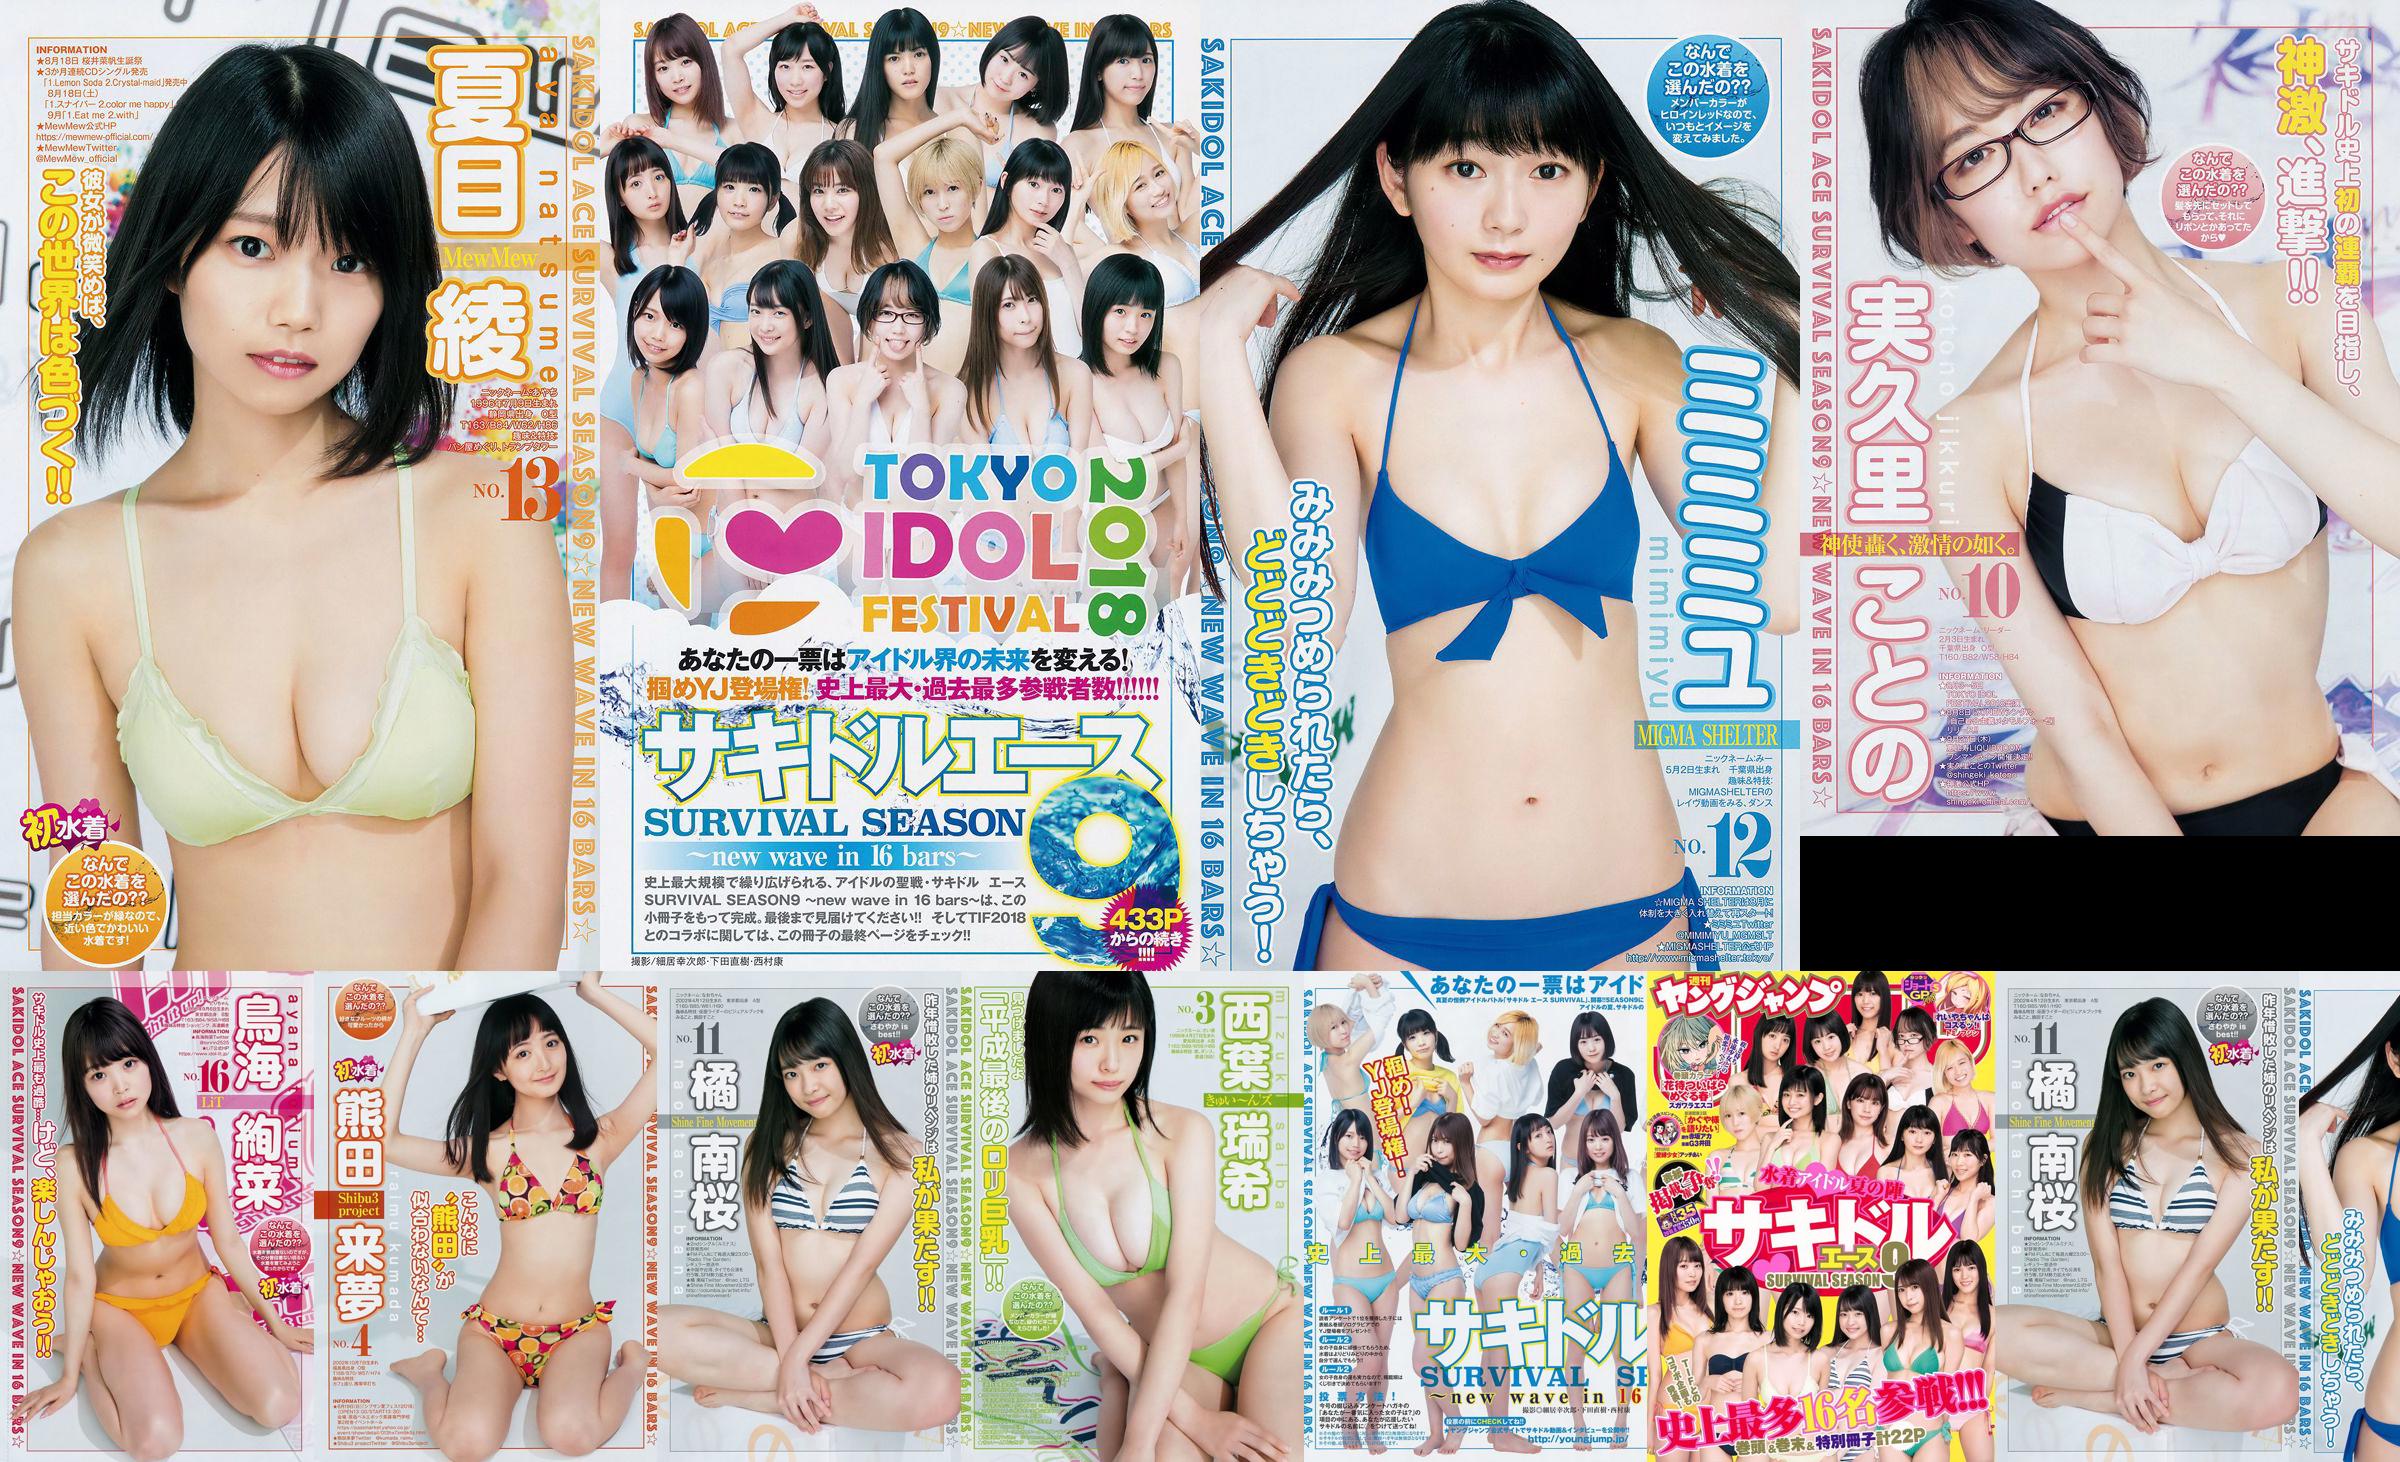 [FLASH] Ikumi Hisamatsu Risa Hirako Ren Ishikawa Angel Moe AKB48 Kaho Shibuya Misuzu Hayashi Ririka 2015.04.21 รูปภาพ Toshi No.0ab292 หน้า 9